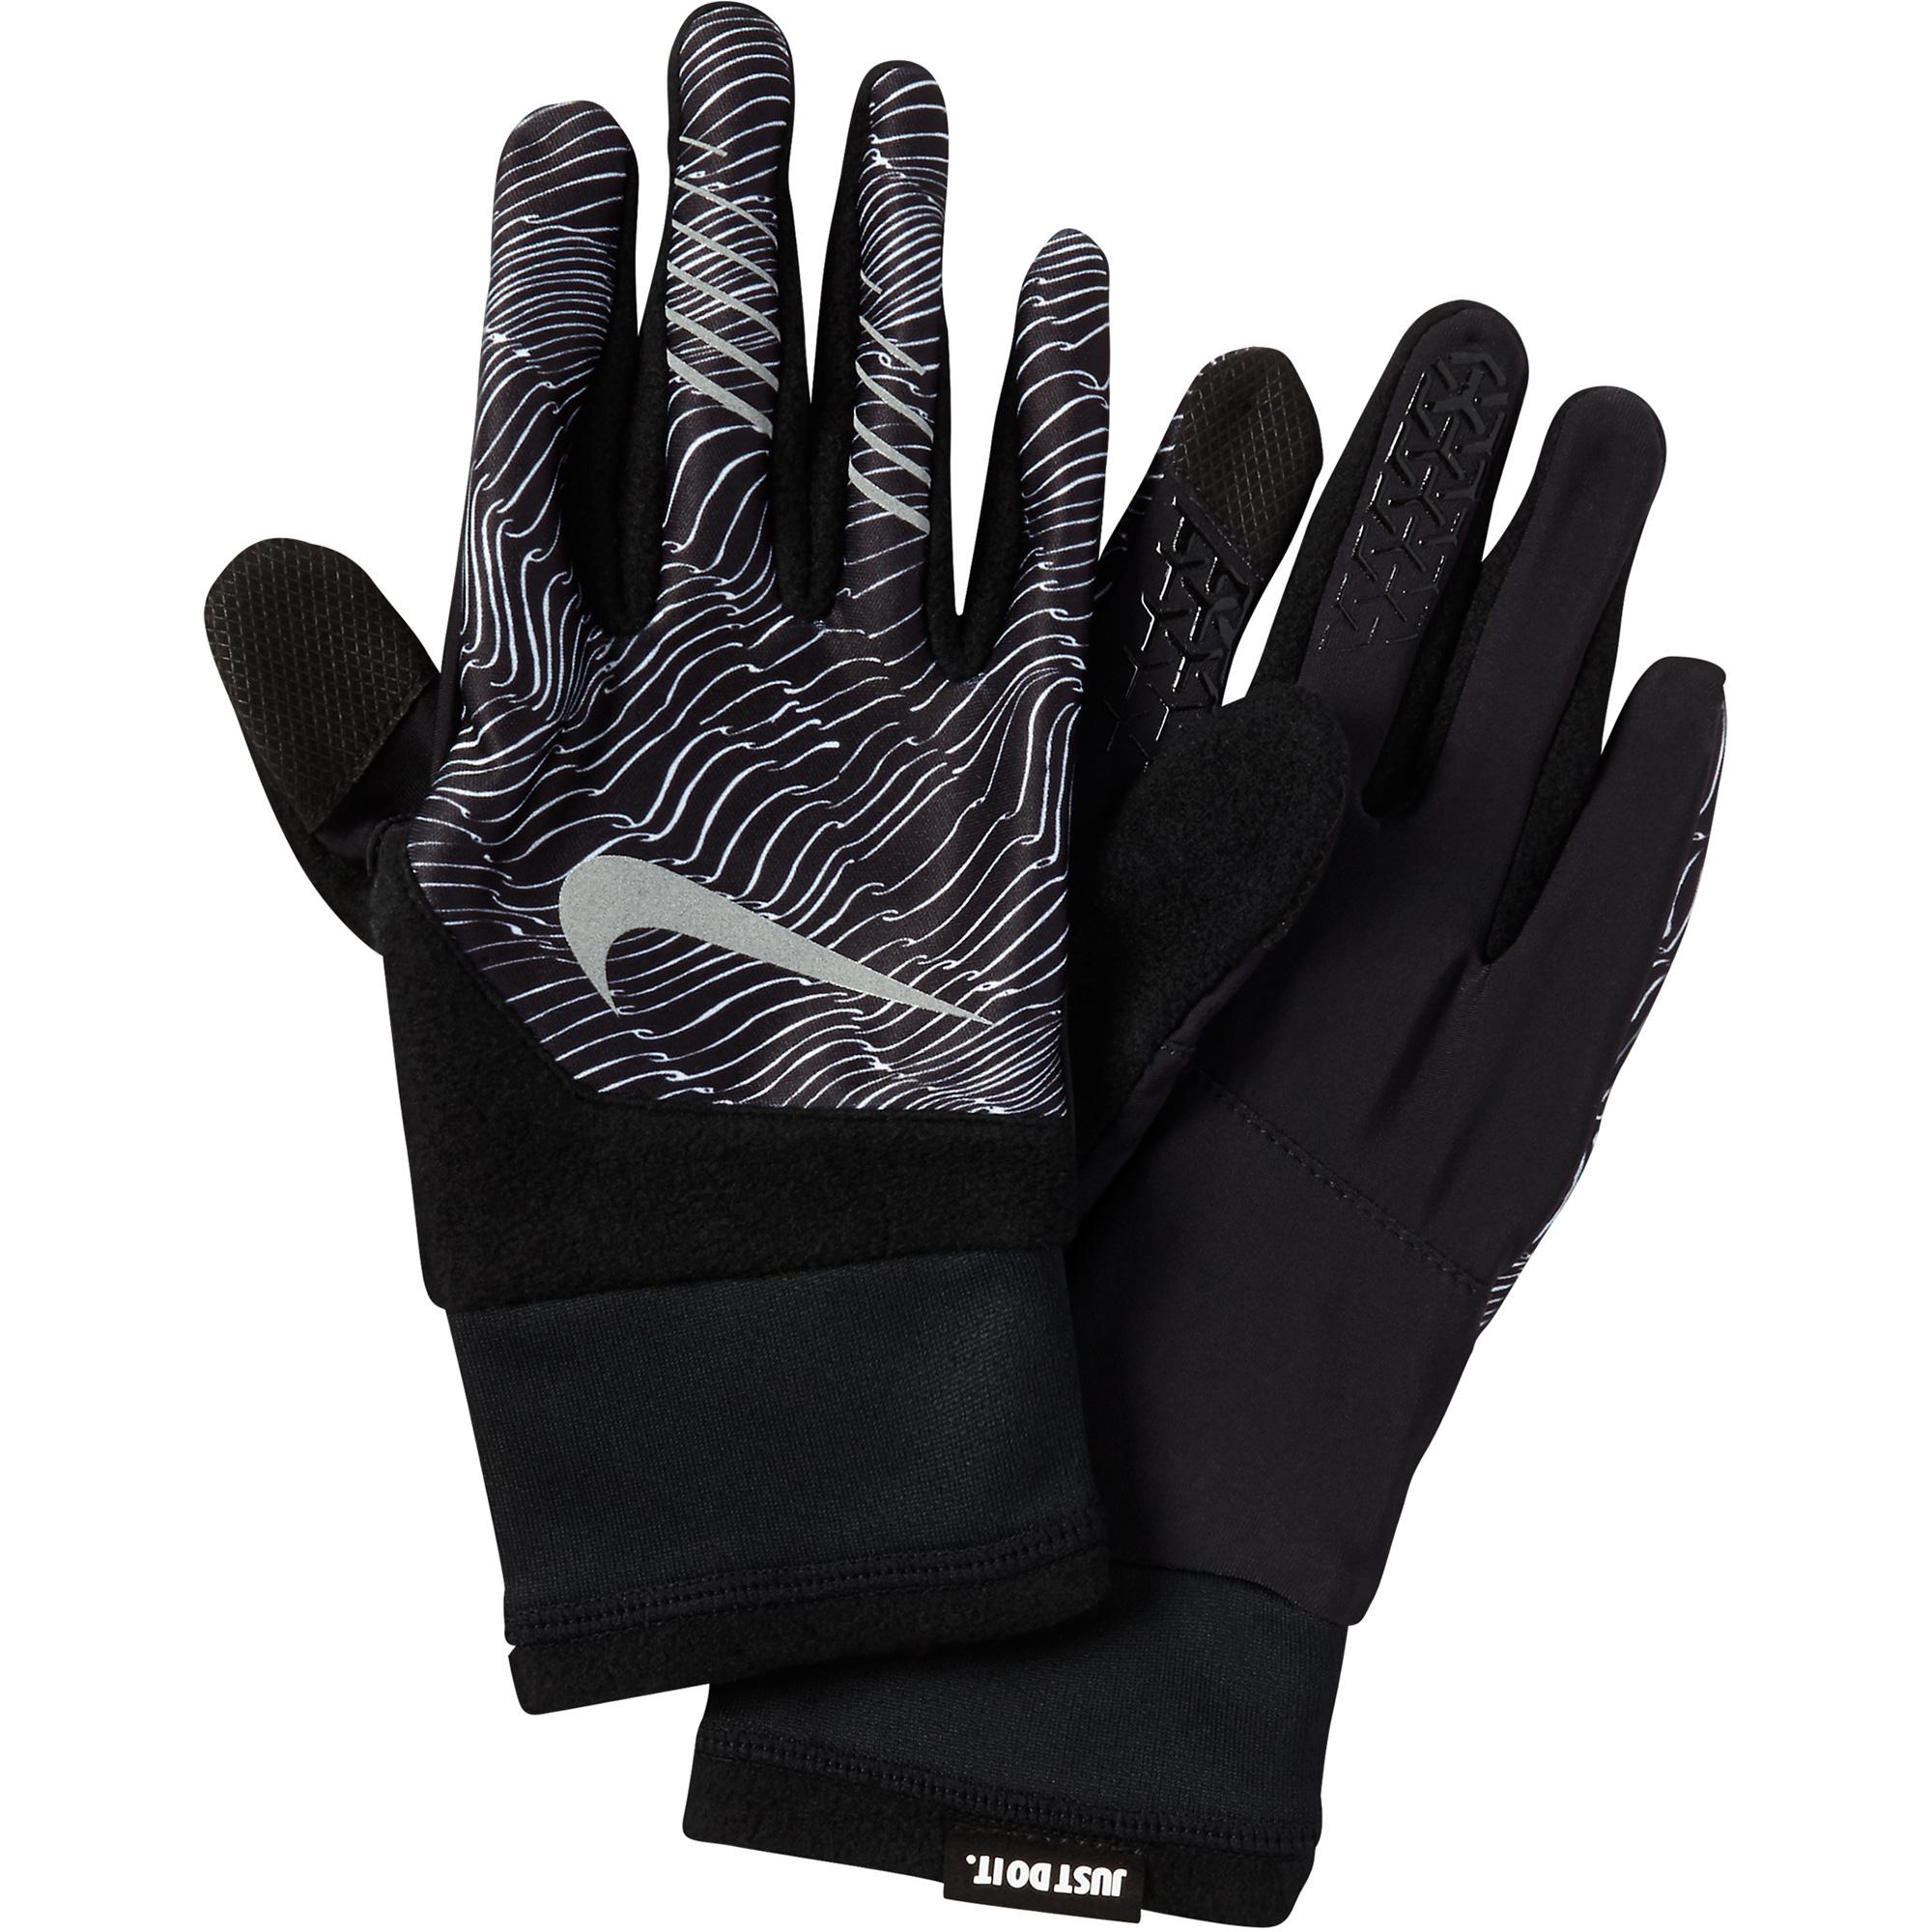 nike therma fit elite 2.0 gloves